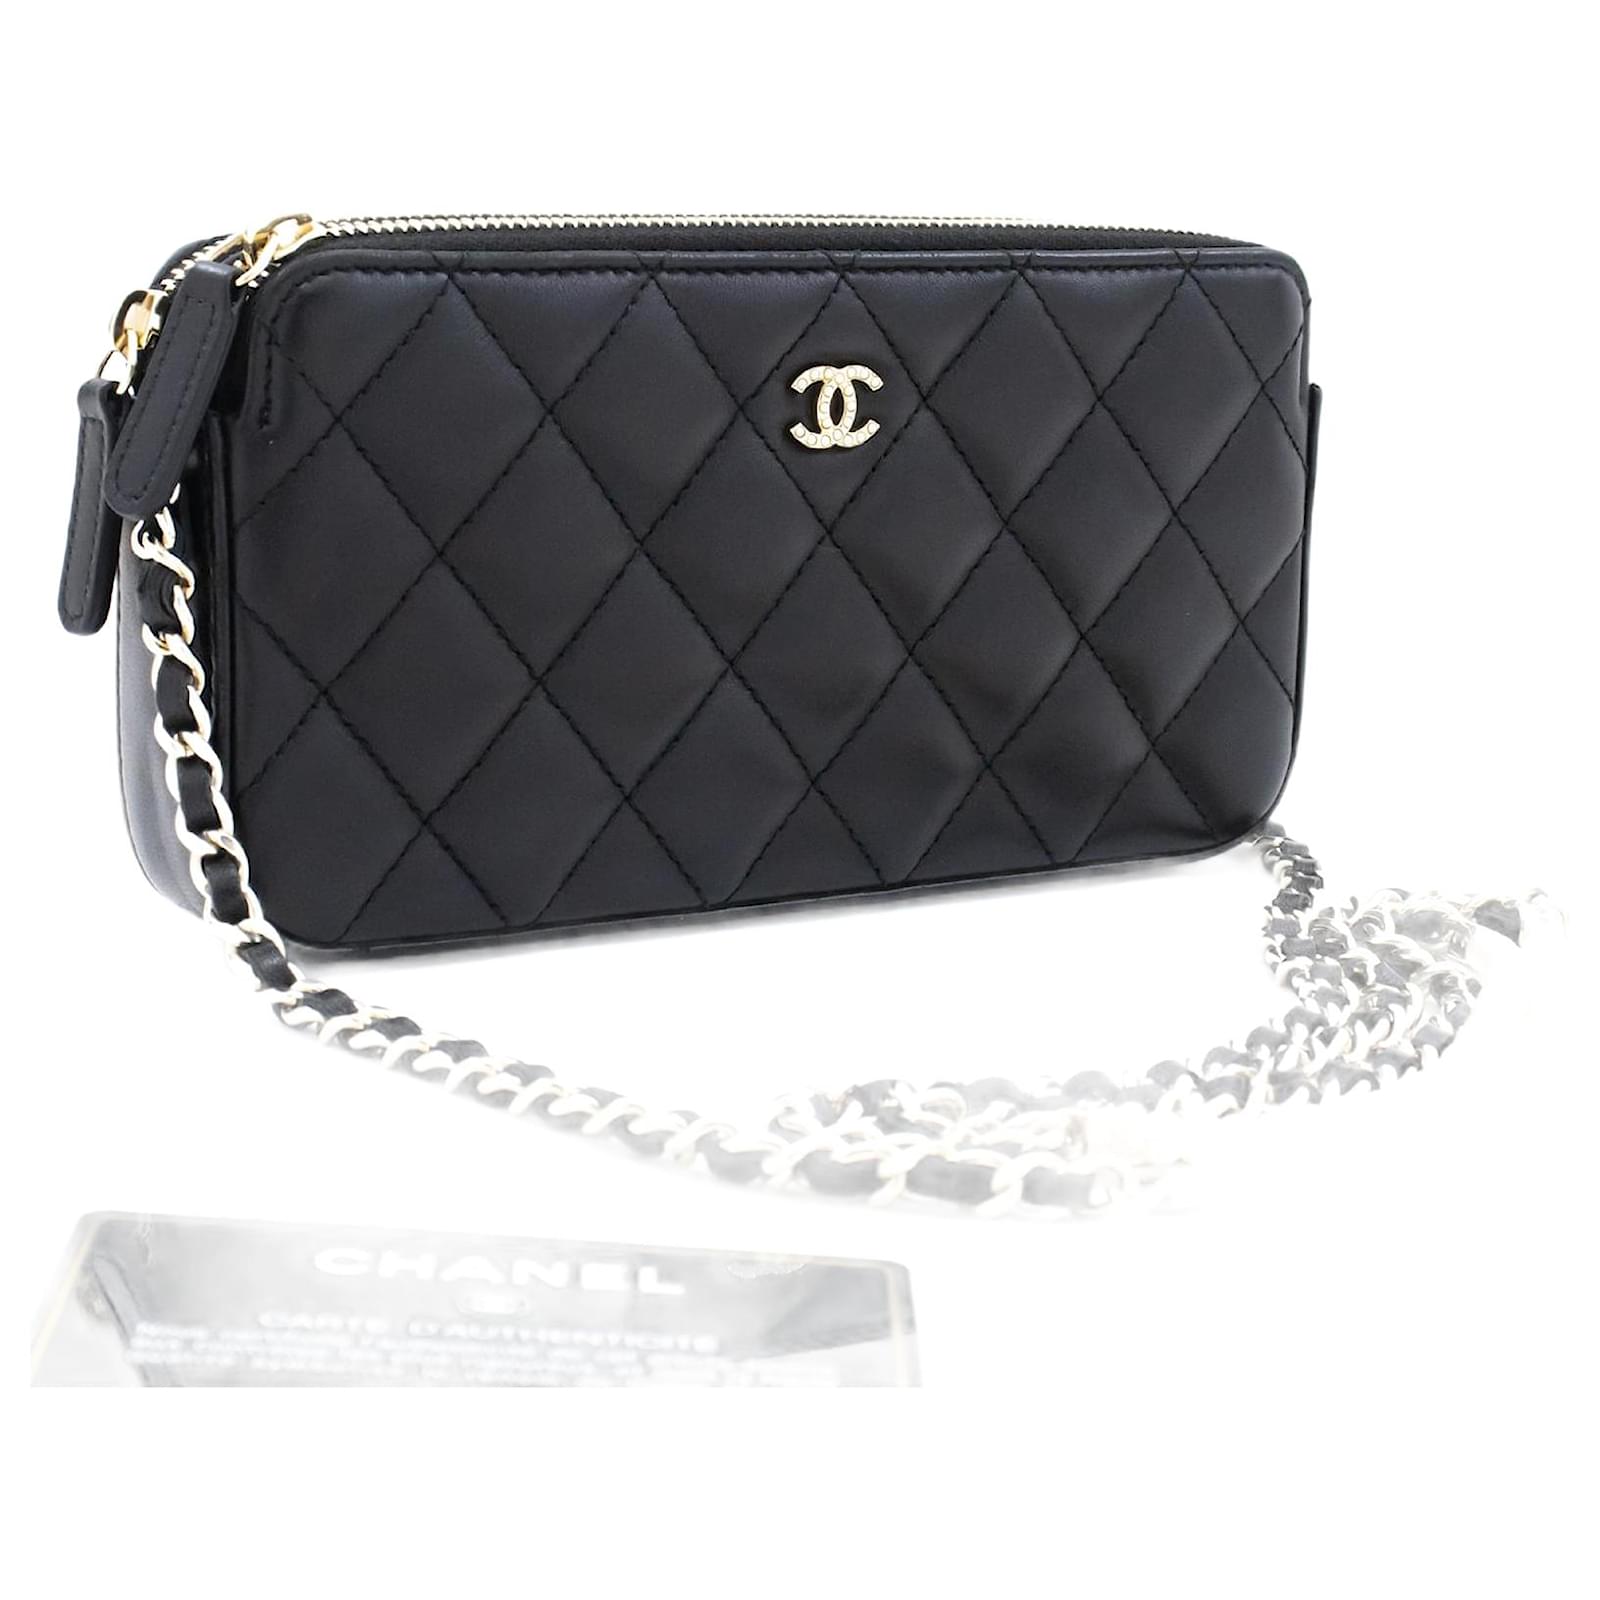 Handbags Chanel Chanel Lambskin Pearl Wallet on Chain Woc Lined Zip Chain Bag